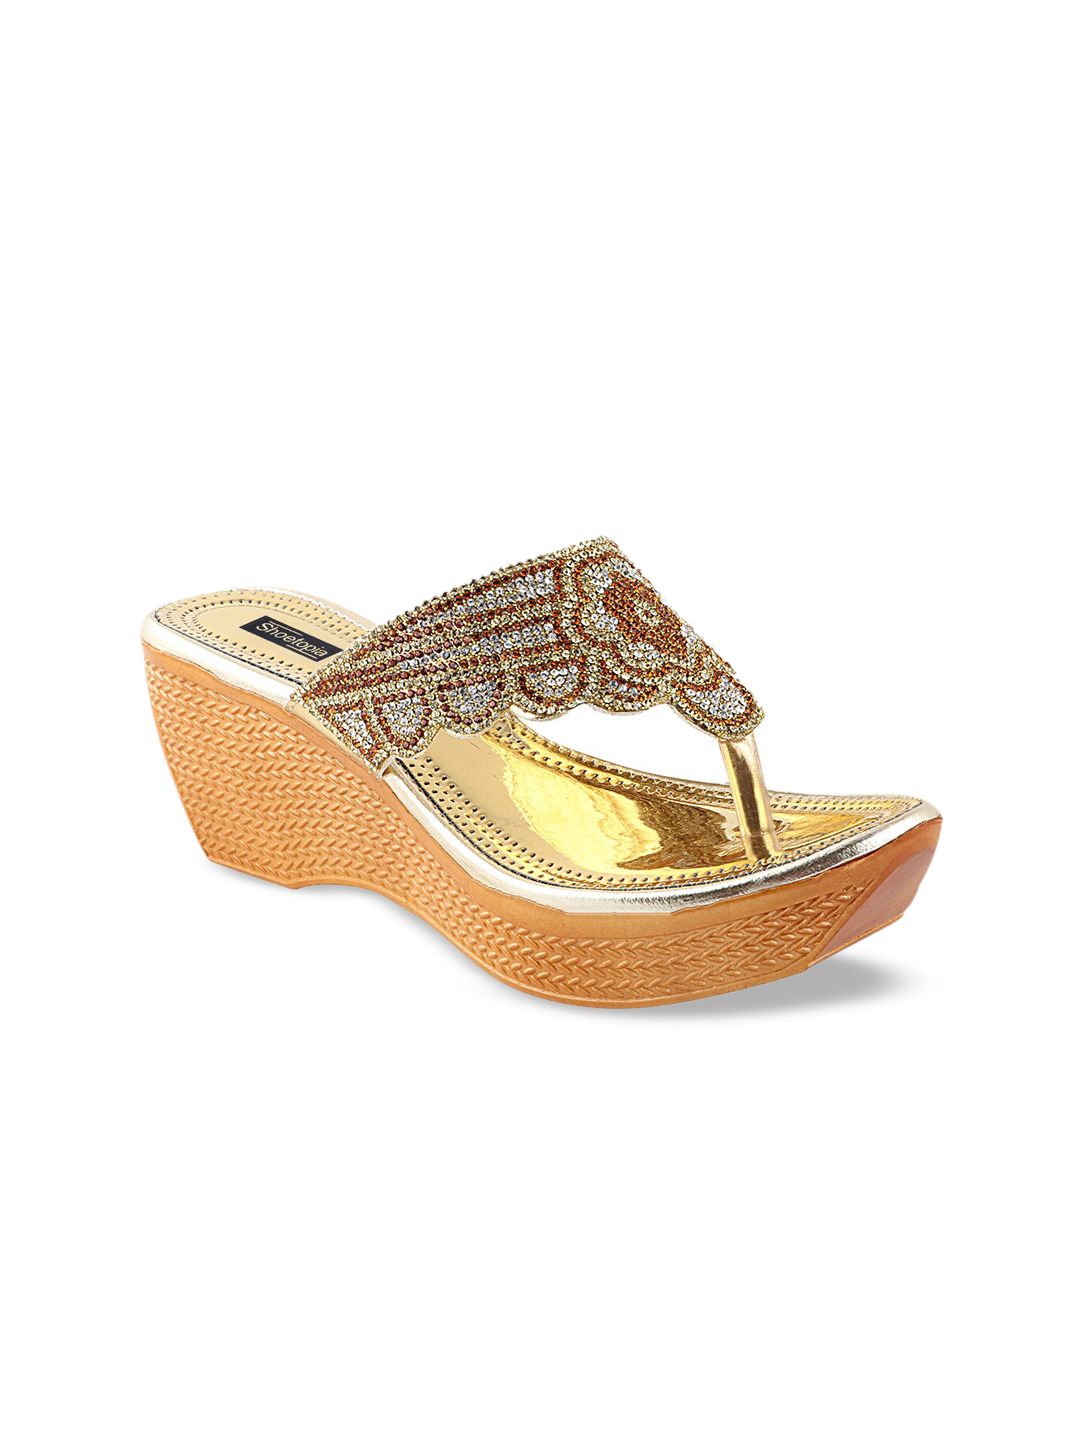 Shoetopia Women Gold-Toned Embellished Heels Price in India